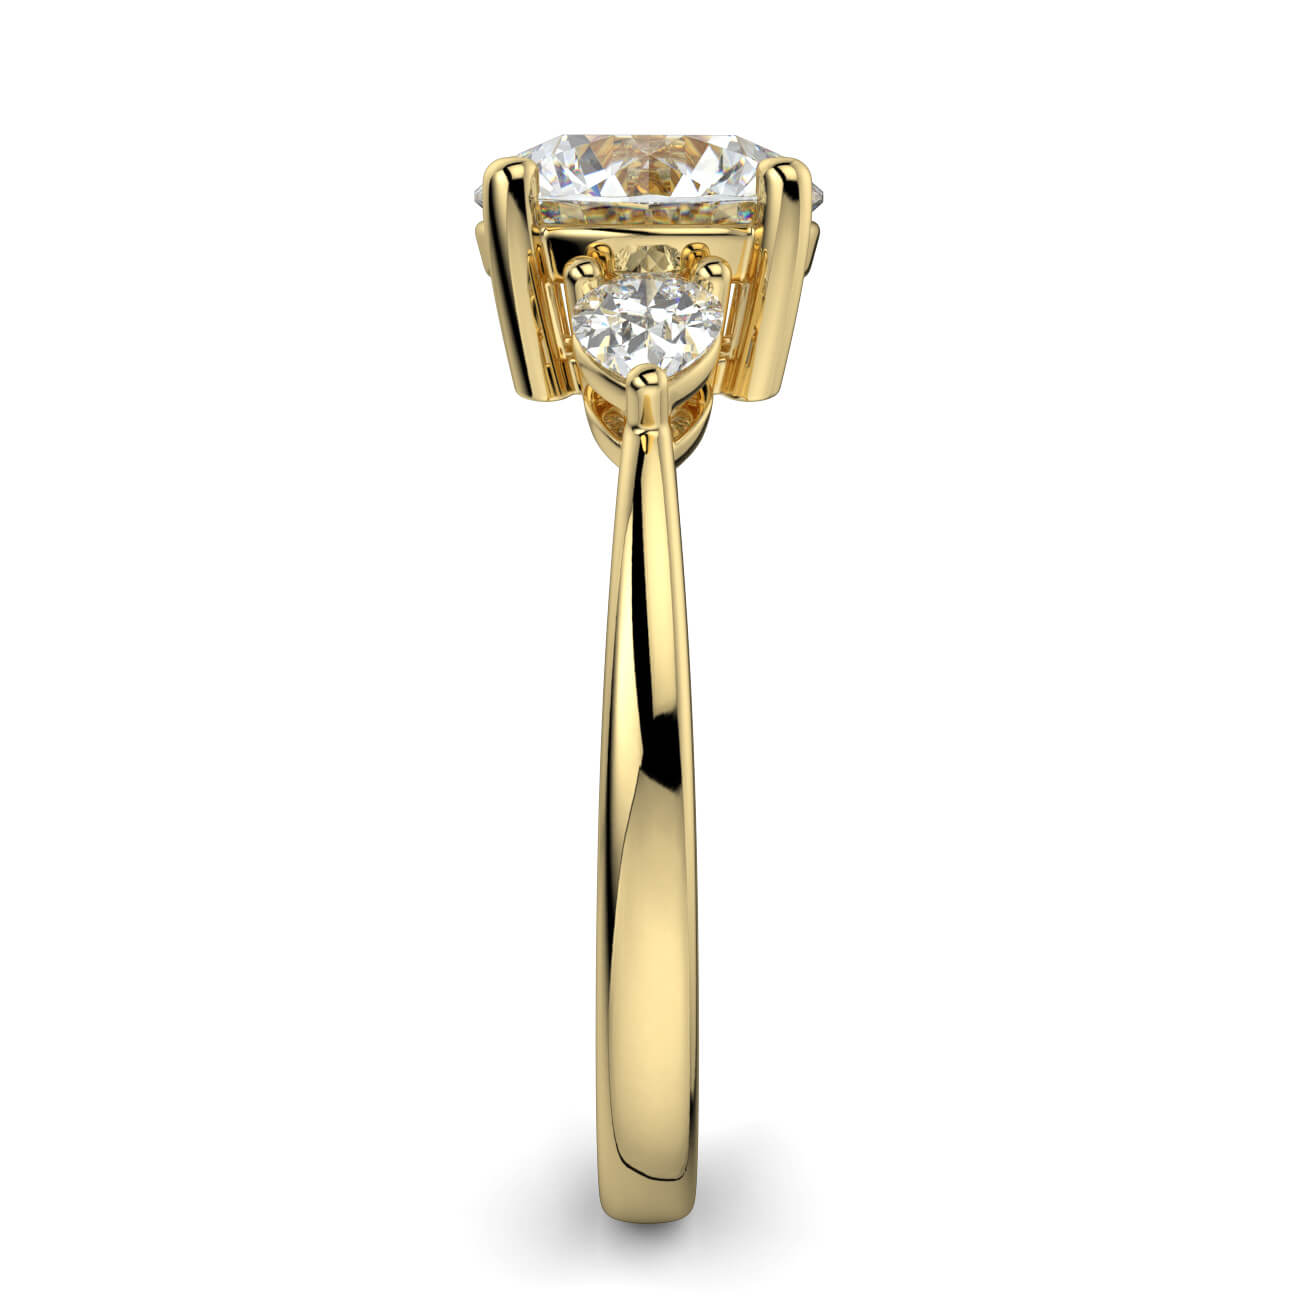 Round Brilliant Cut Diamond Ring With Pear Shape Side Diamonds In Yellow Gold – Australian Diamond Network